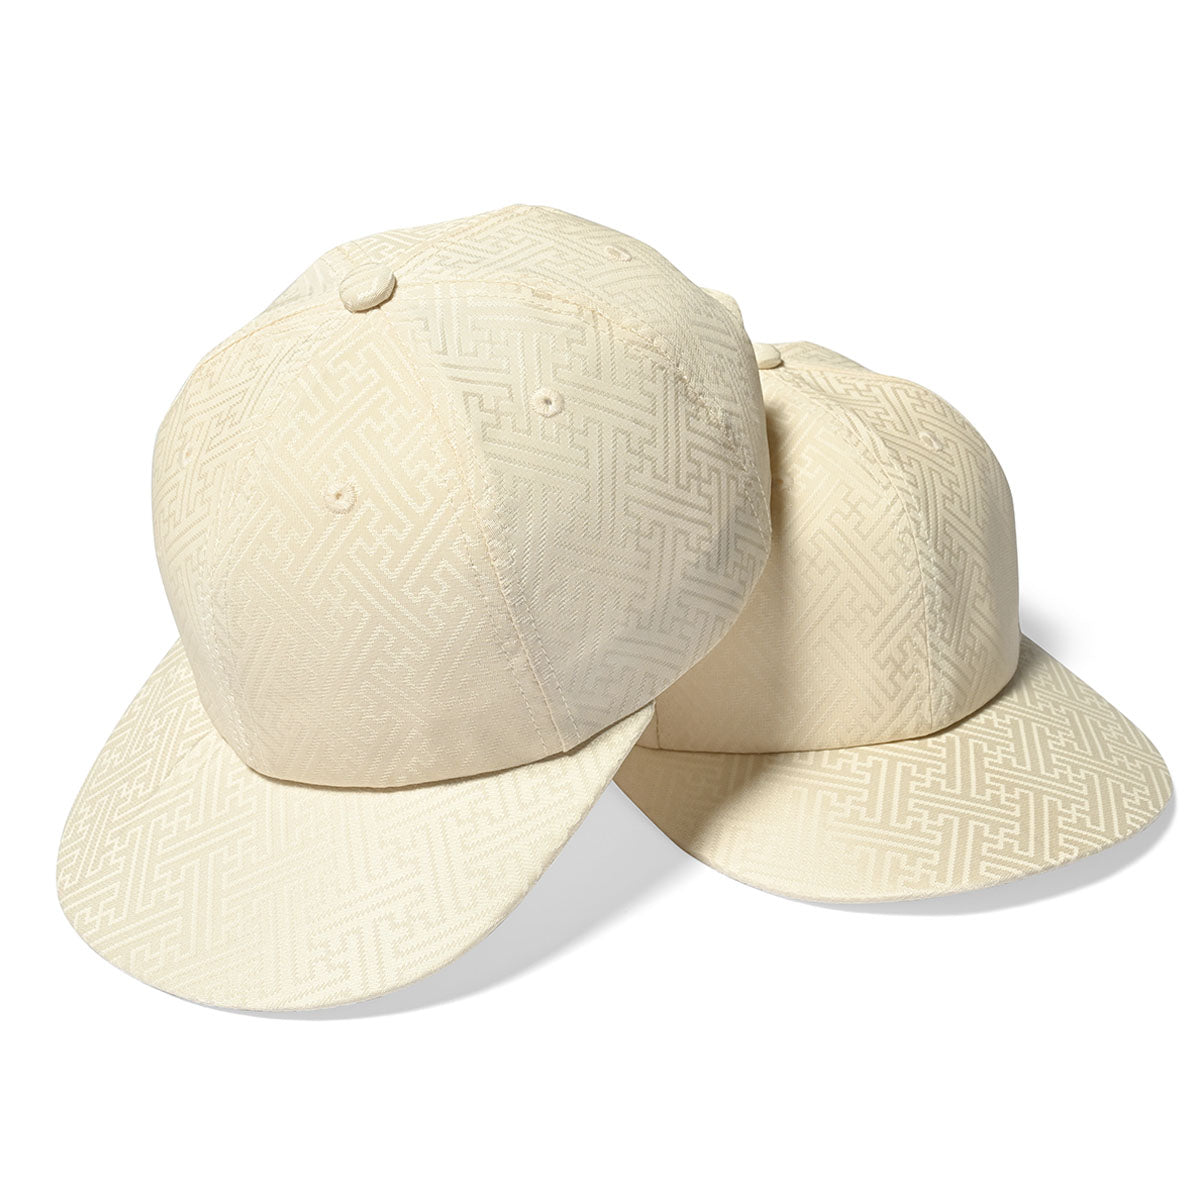 HOMEGAME - 13 型和服傳統日本布料老爸帽